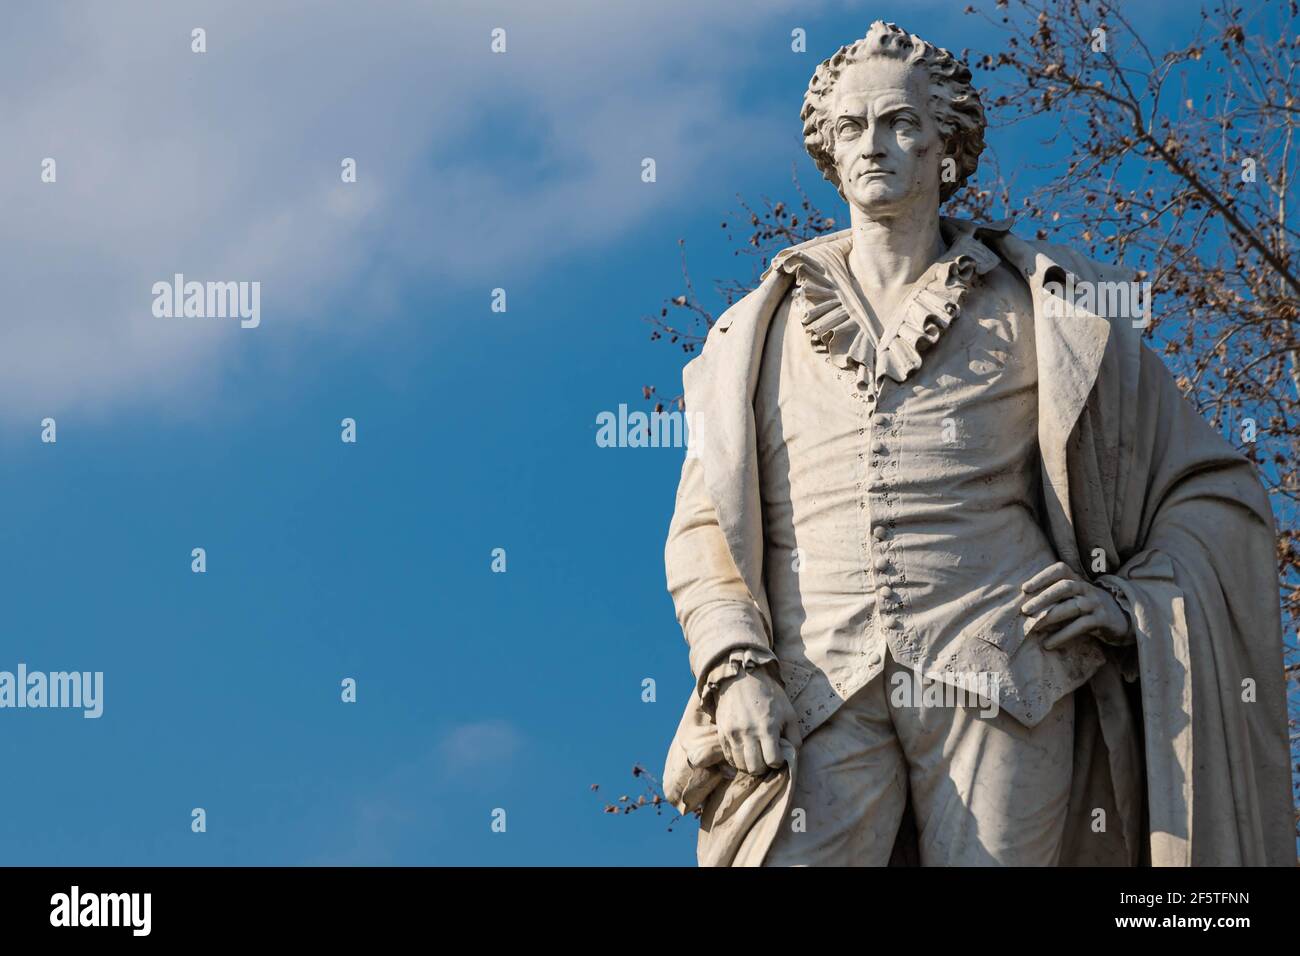 Statue in honor of Vittorio Alfieri, poet, playwright and theatrical writer born in Asti in 1749.Asti, Piedmont, Italy. Stock Photo